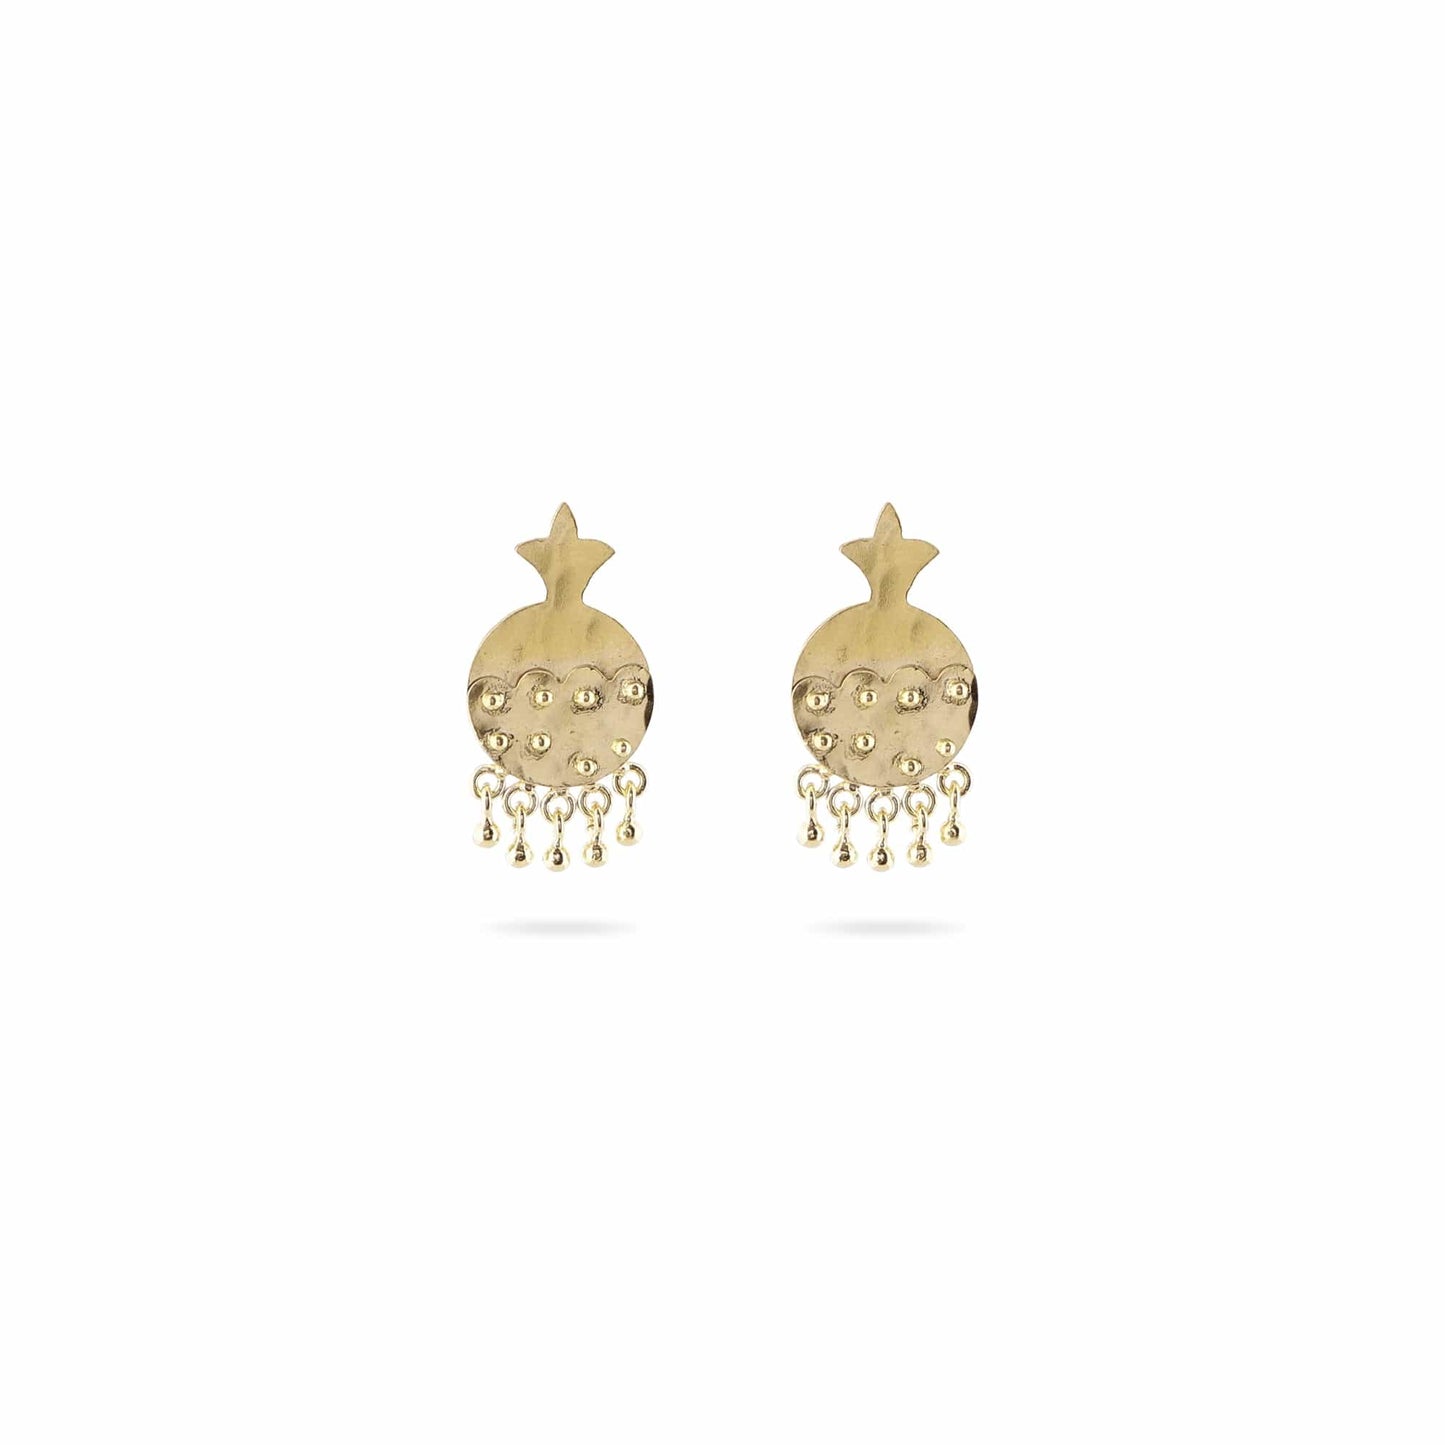 Christine Bekaert Jewelry Earring Small Pomegranate Stud